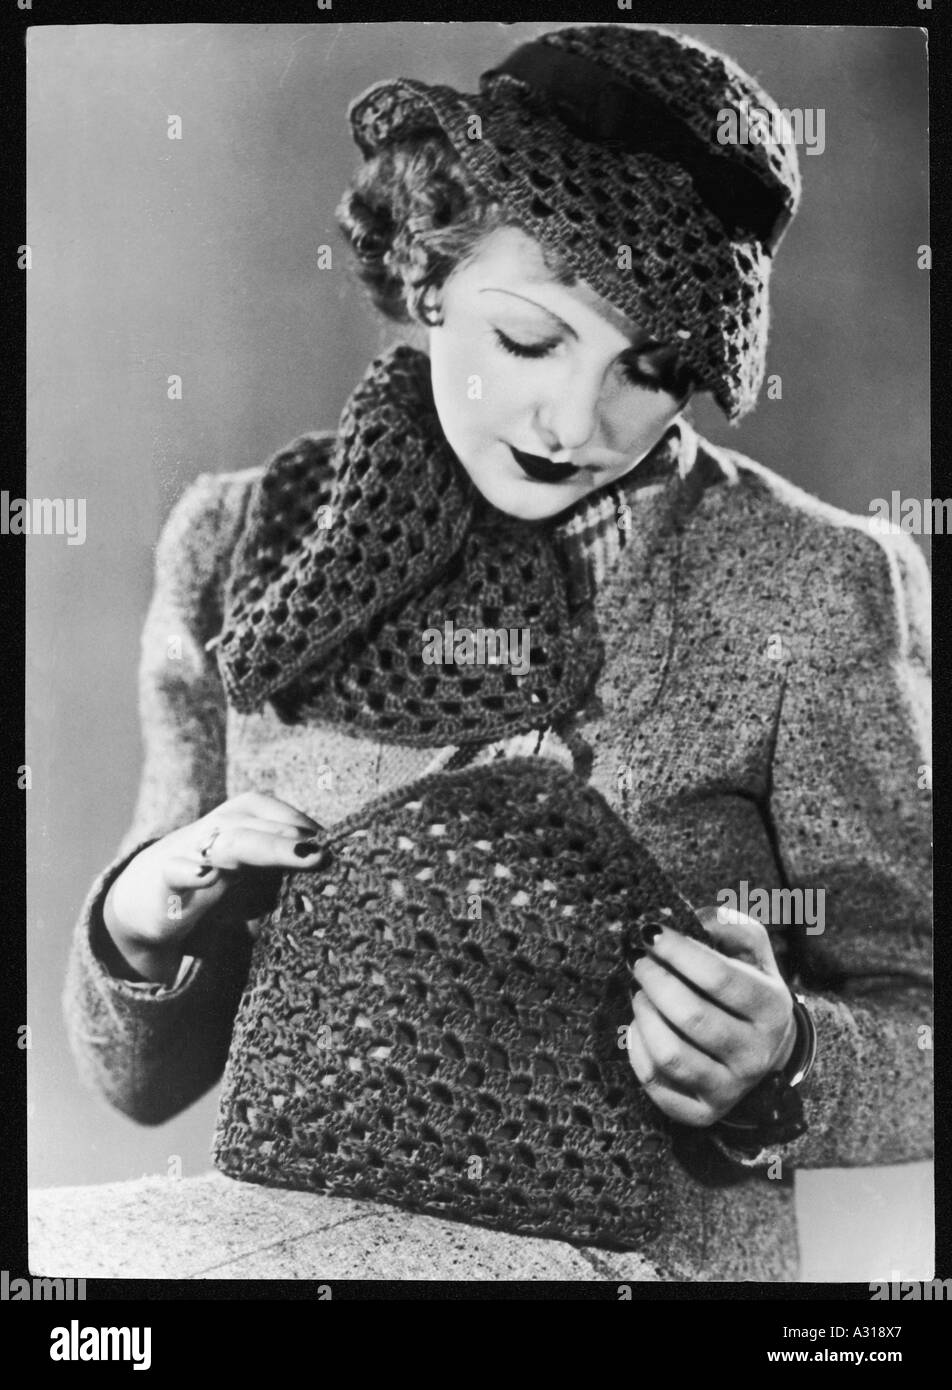 Crochet Accessories Stock Photo